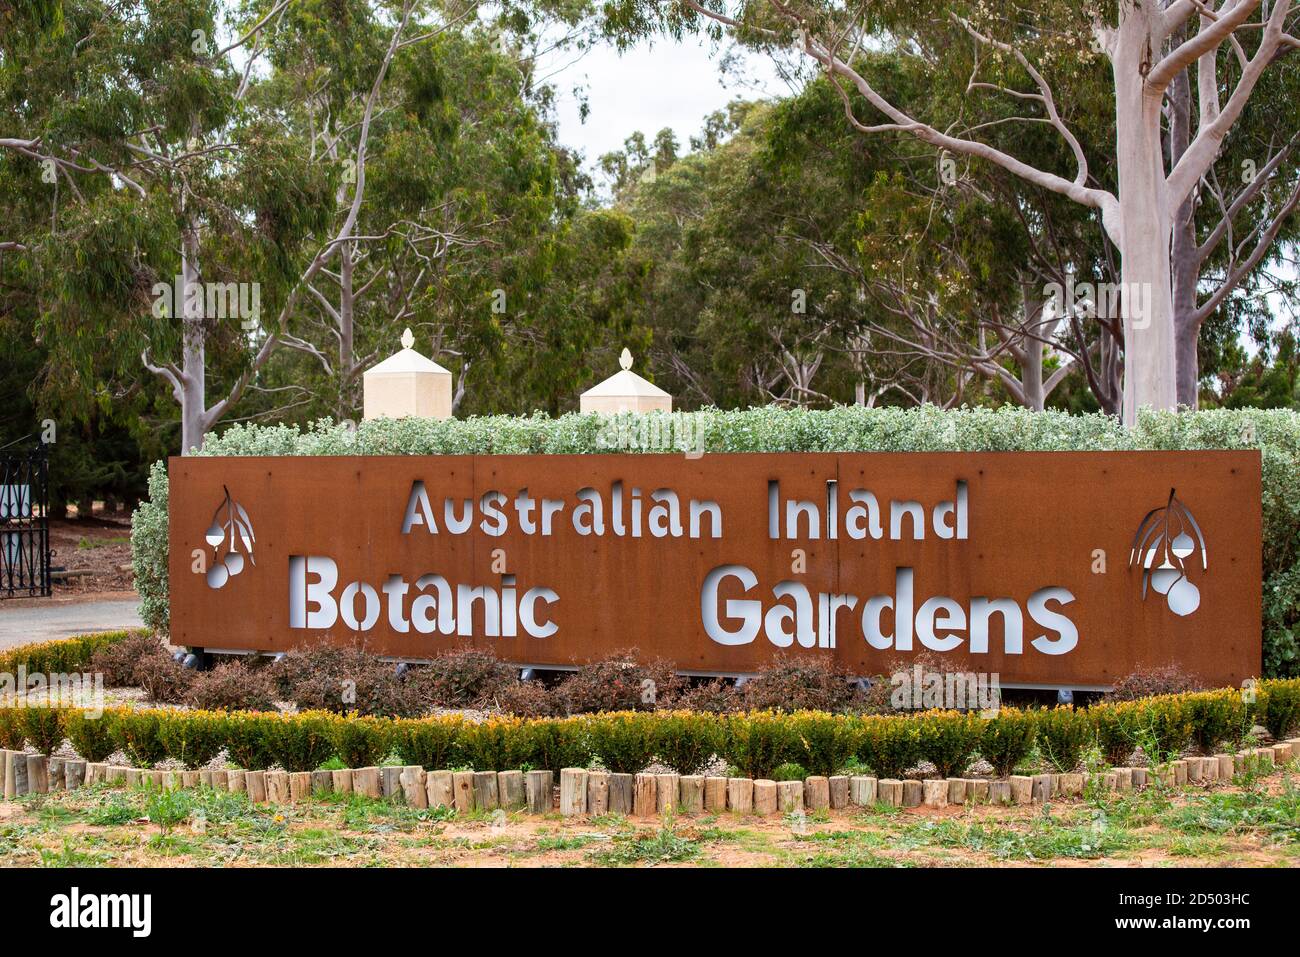 Australian inland botanic gardens sign in NSW Australia Stock Photo